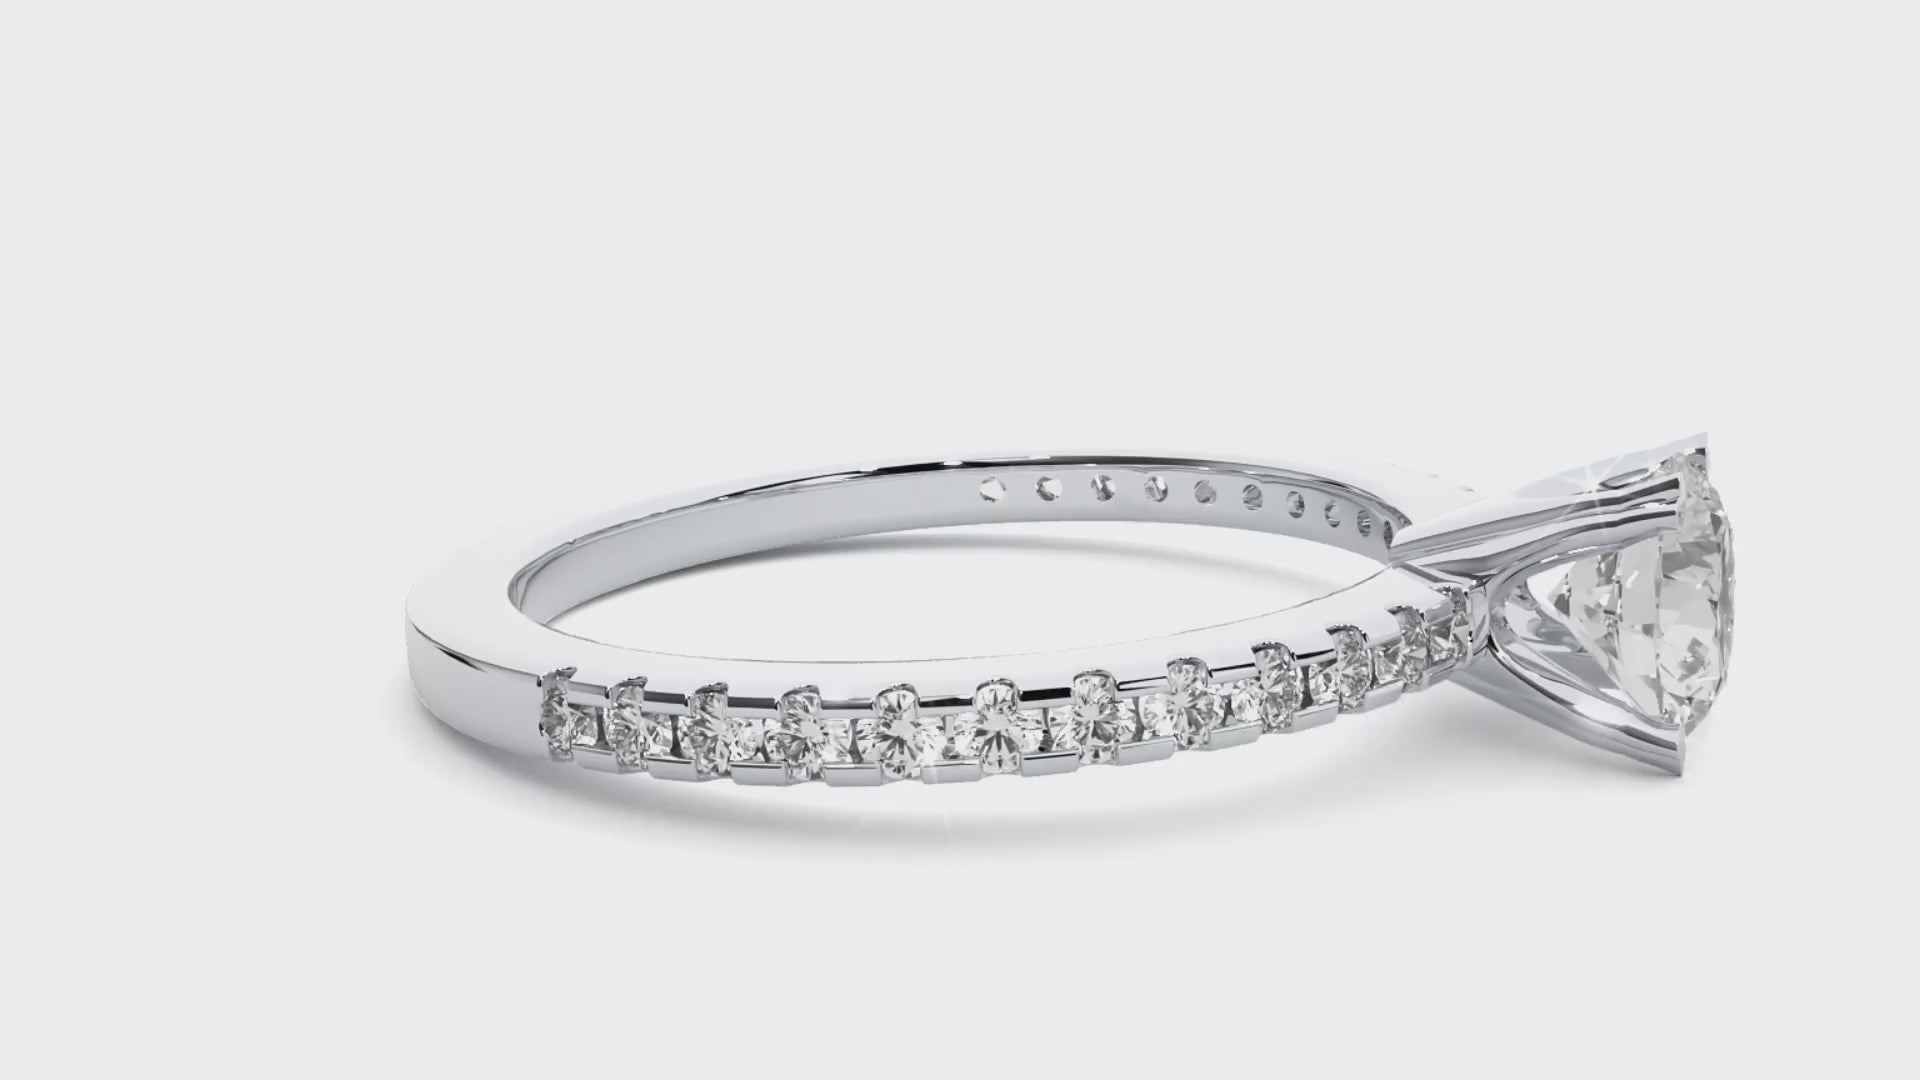 HOH Edie Diamond Solitaire Ring